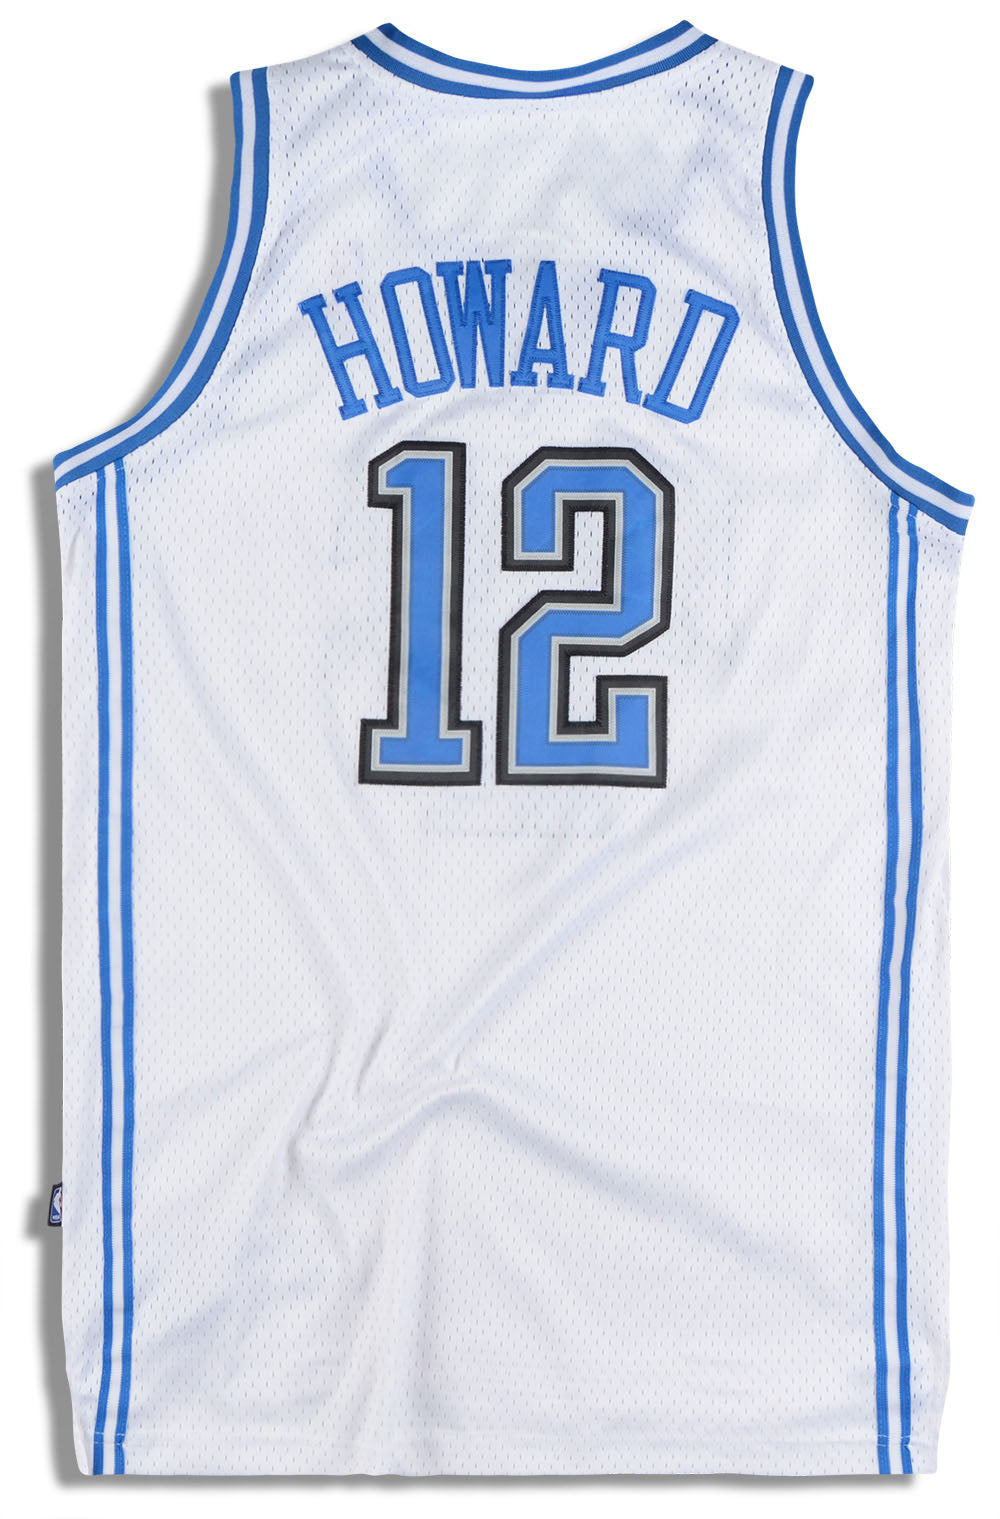 Orlando Magic NBA Dwight Howard #12 Jersey Reebok Youth Sz L Length +2